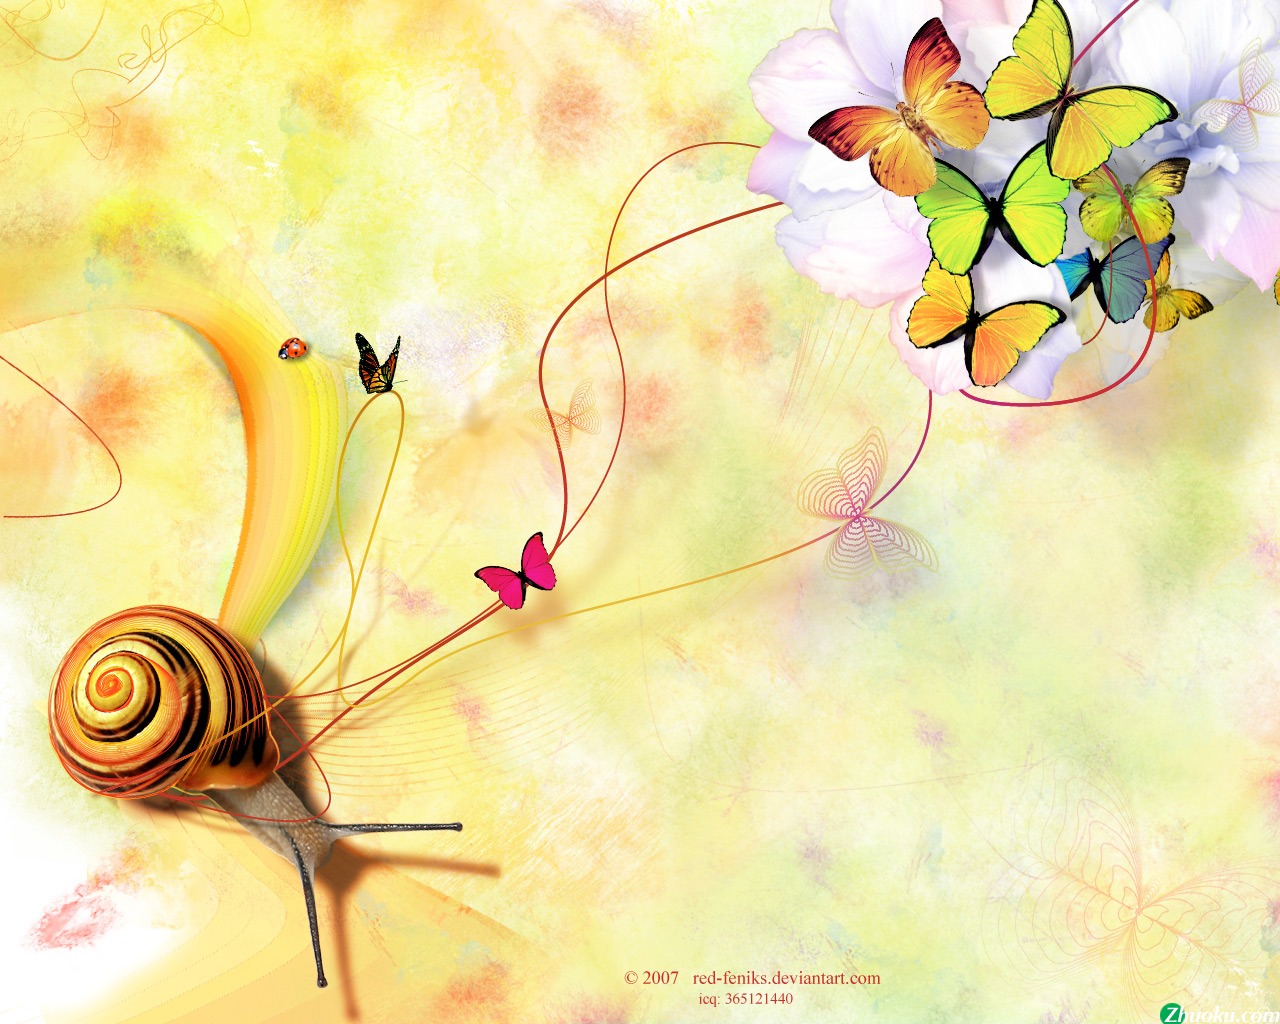 http://4.bp.blogspot.com/-_KROWv1KLic/Te6Z8OfIVrI/AAAAAAAAC68/sKllqyjfgMM/s1600/1214840025_1280x1024_snail-butterflies-wallpaper.jpg